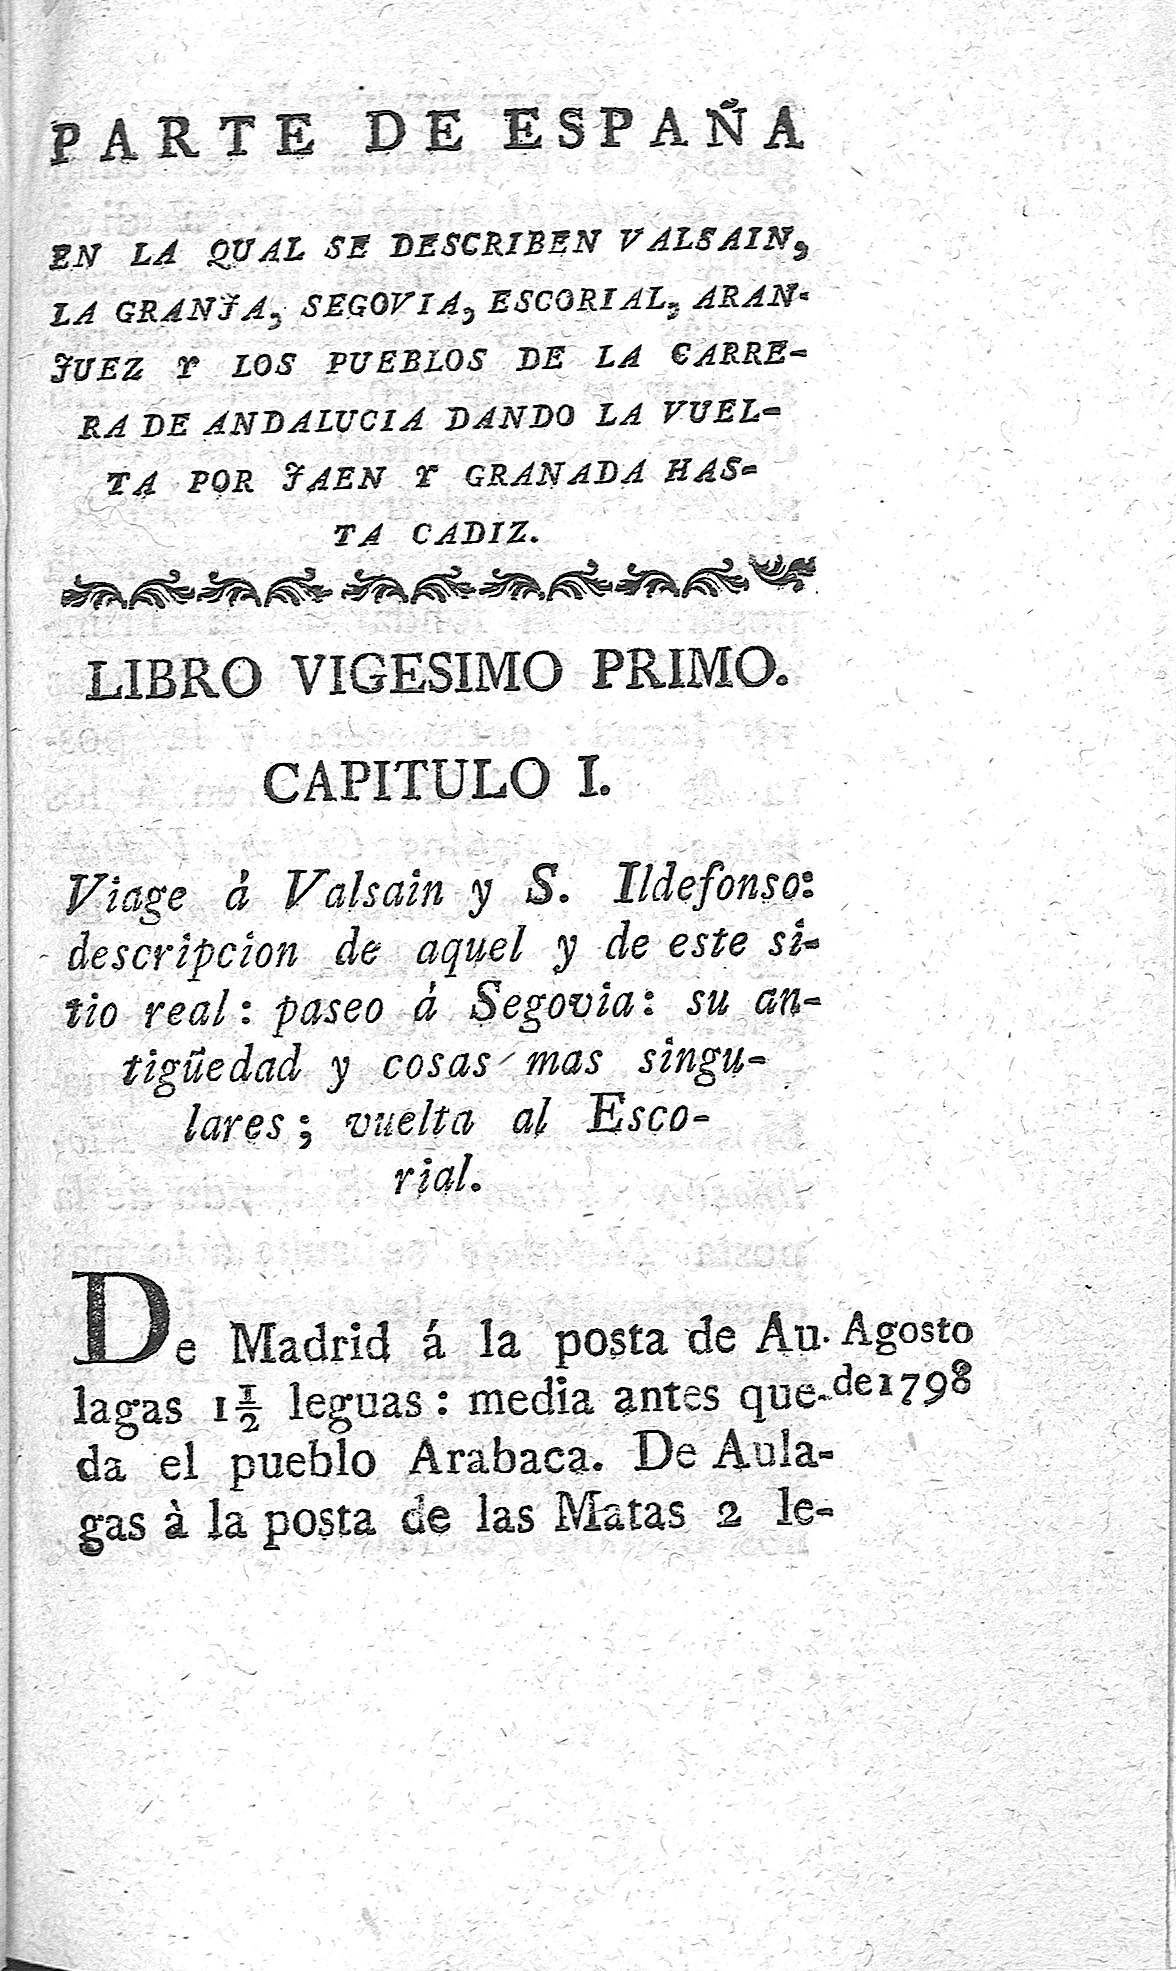 Parte de España; Libro vigesimo primo y Capitulo I